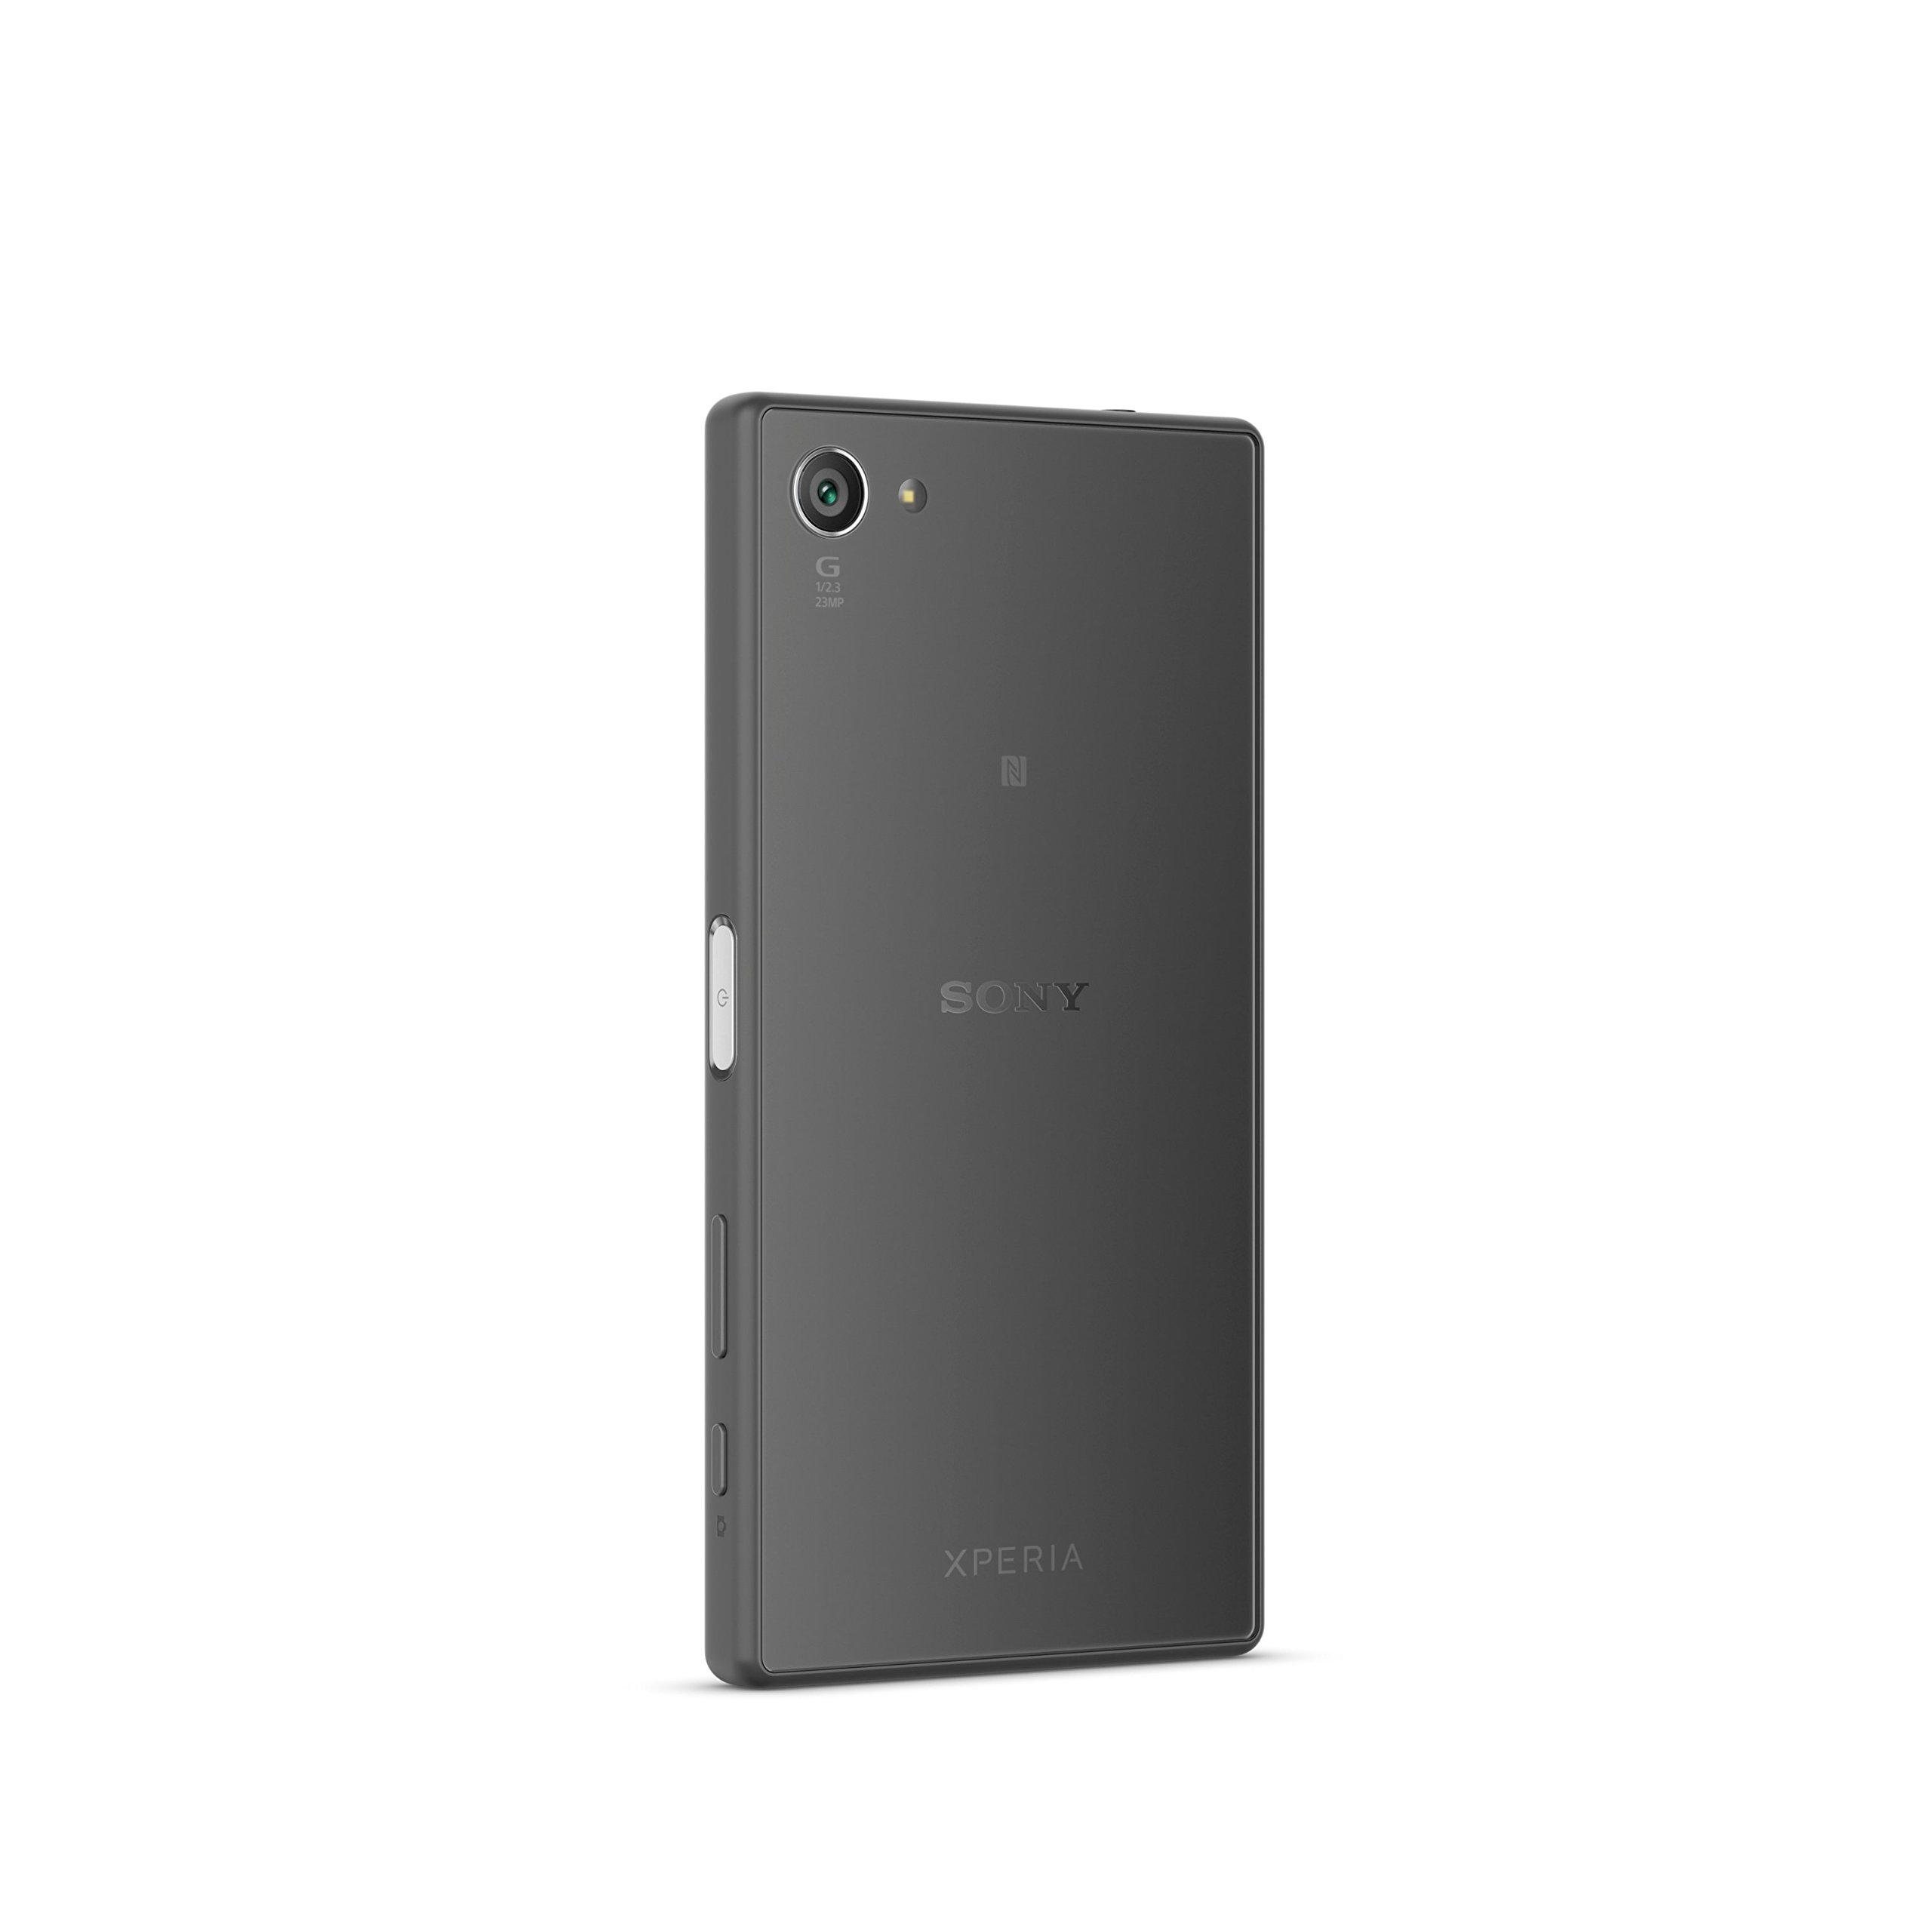 Sony Xperia Z5 Compact Unlocked Phone - Black (U.S. Warranty)